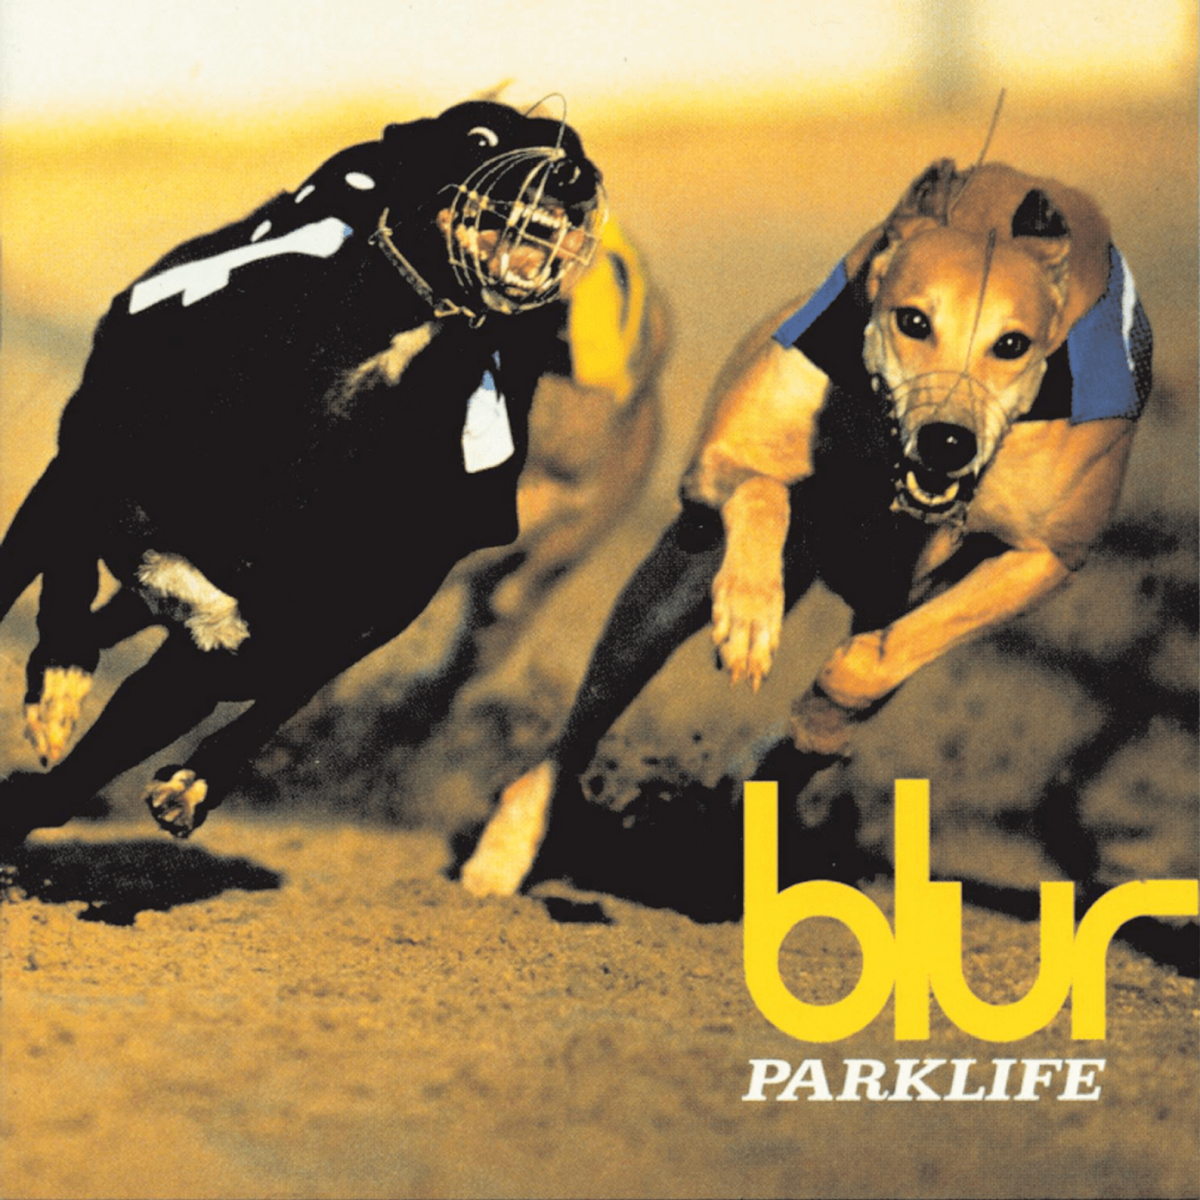 The official album cover for Blur’s “Parklife.”